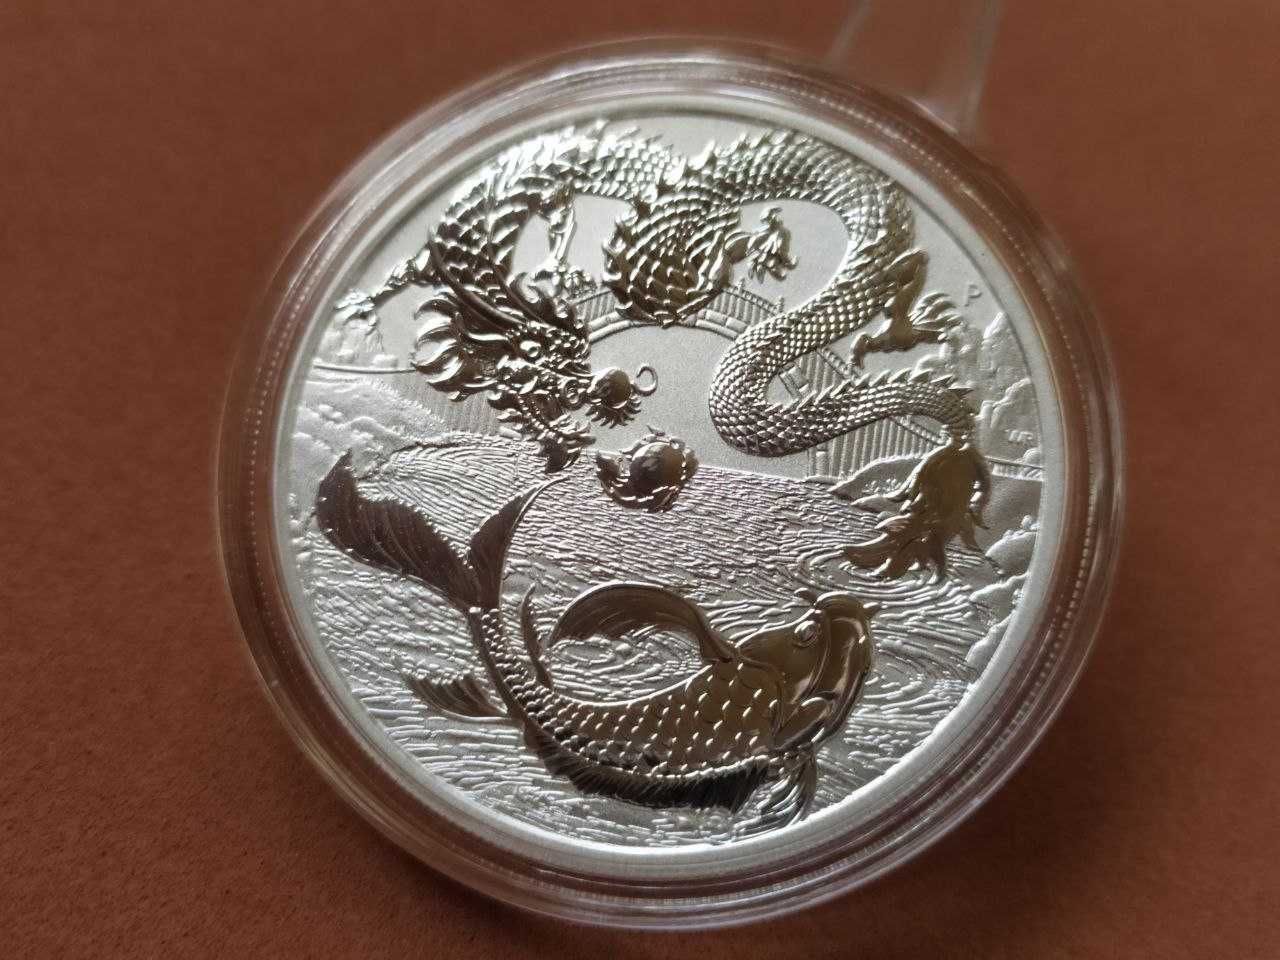 Дракон и Кои: Китайские Мифы. Инвестиционная монета. Серебро 999